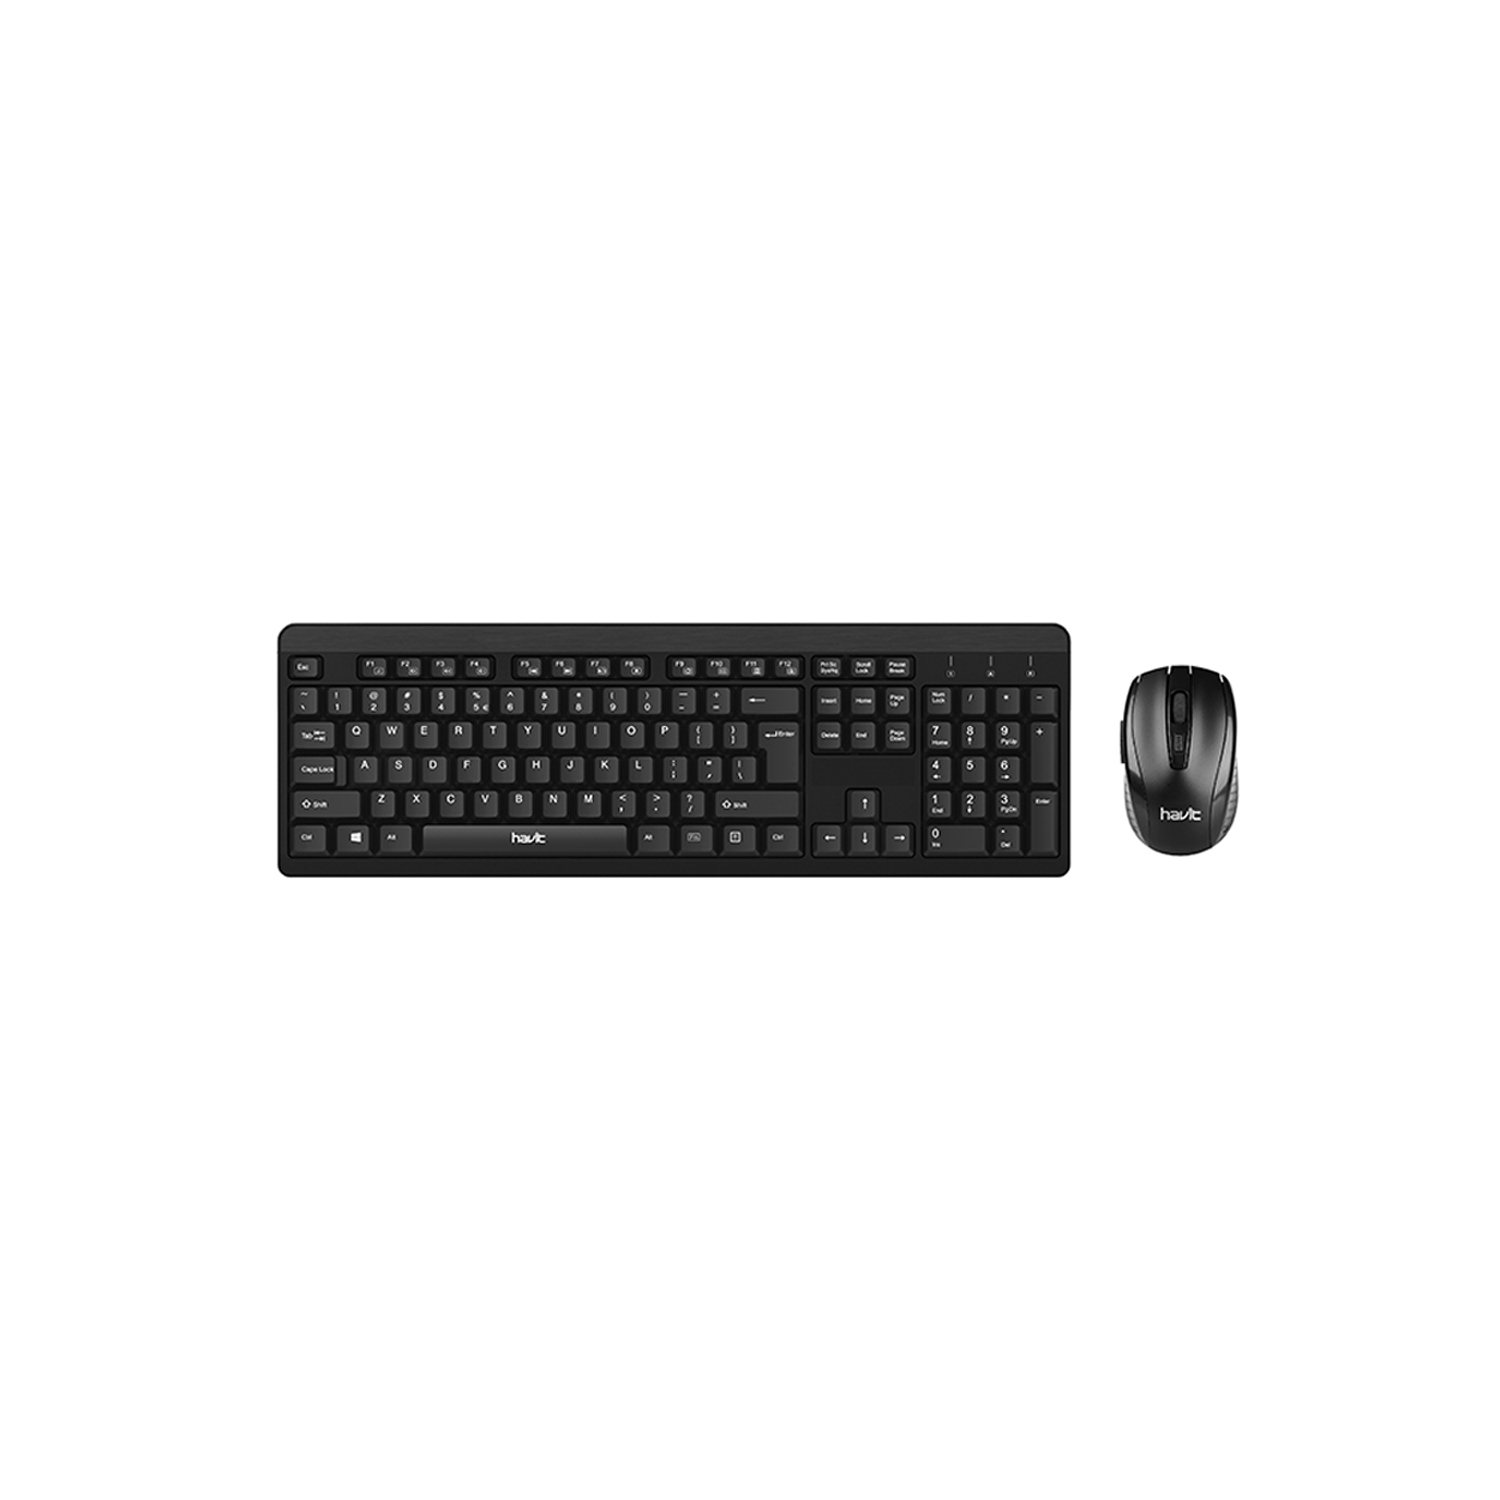 Havit KB260GCM 2.4GHz Wireless Keyboard & Mouse Kit - Black (English Layout)